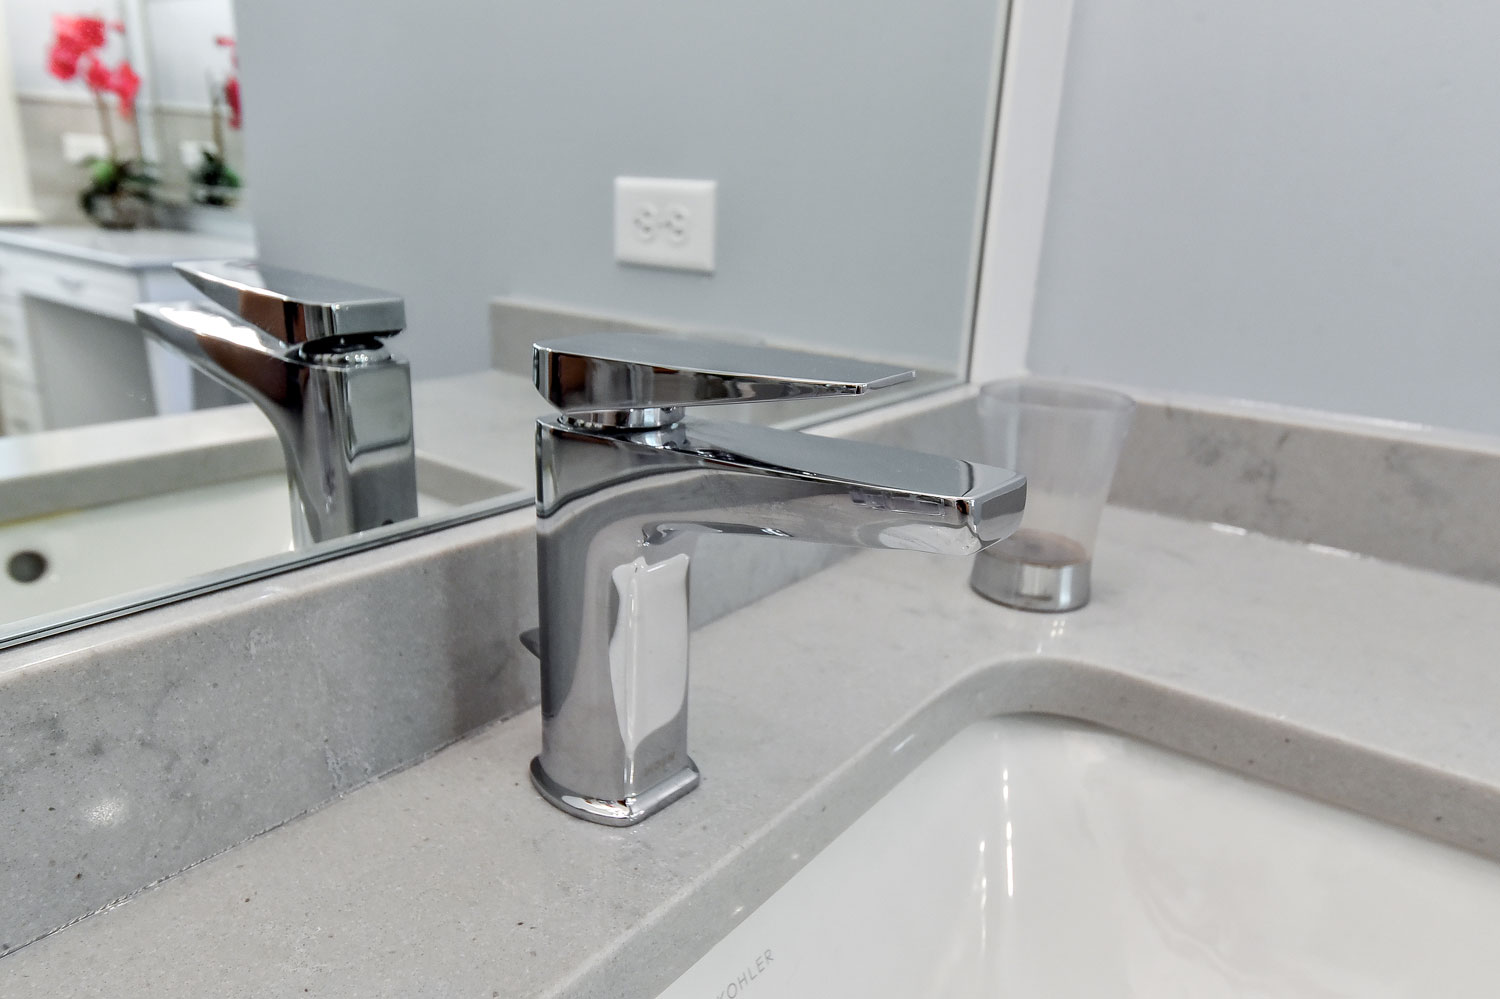 Naperville bathroom curbless modern - Sebring Design Build